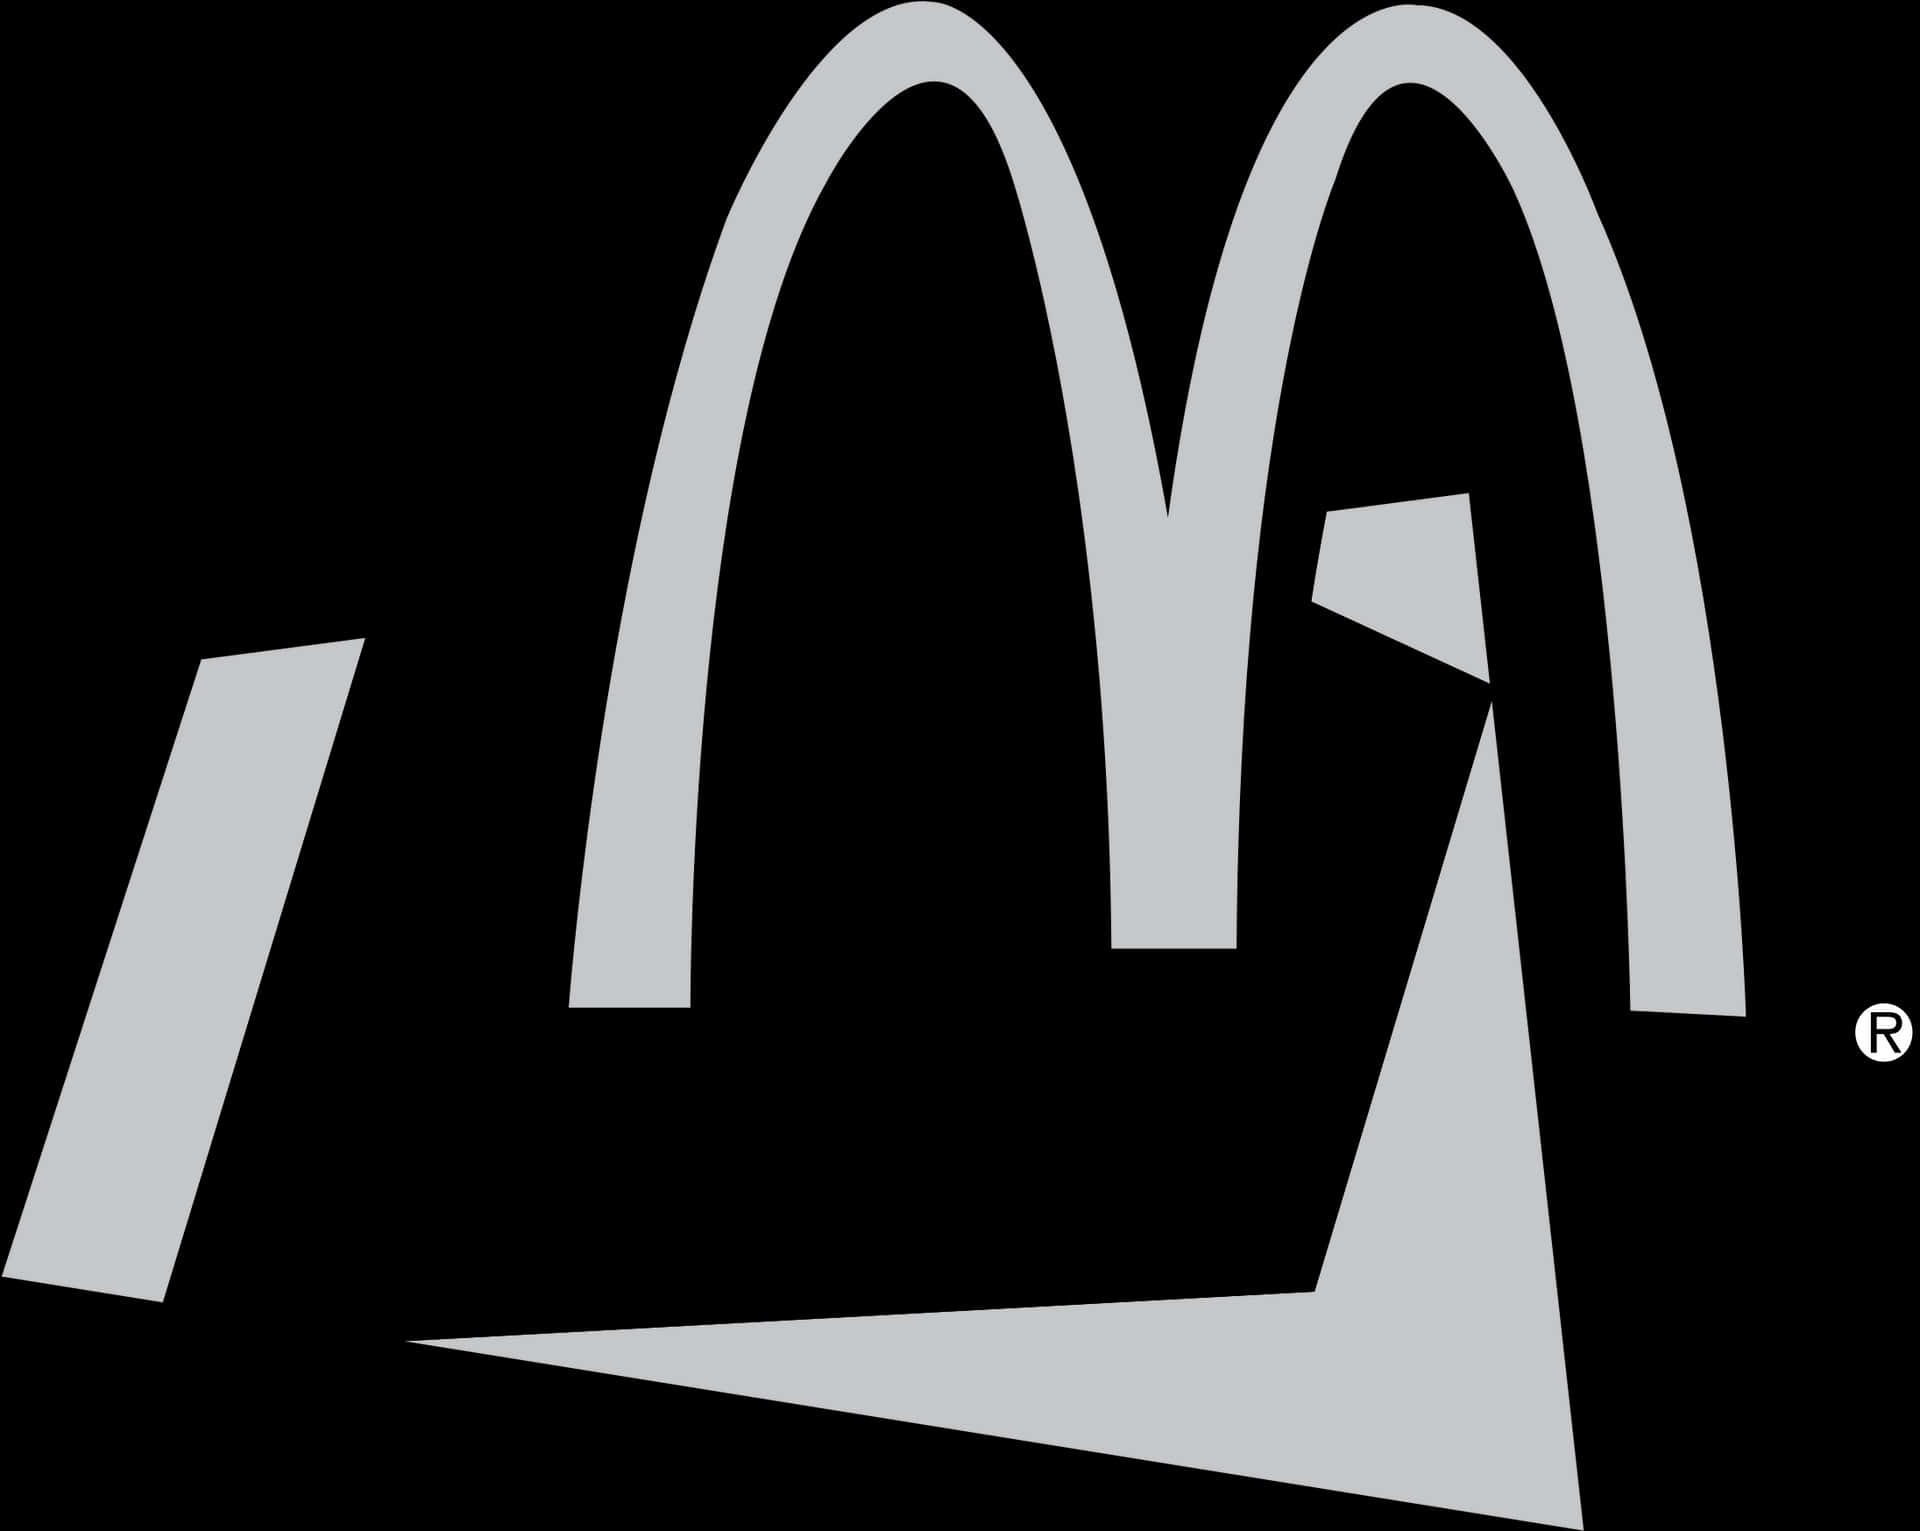 Mc Donalds Iconic Golden Arches Logo PNG image